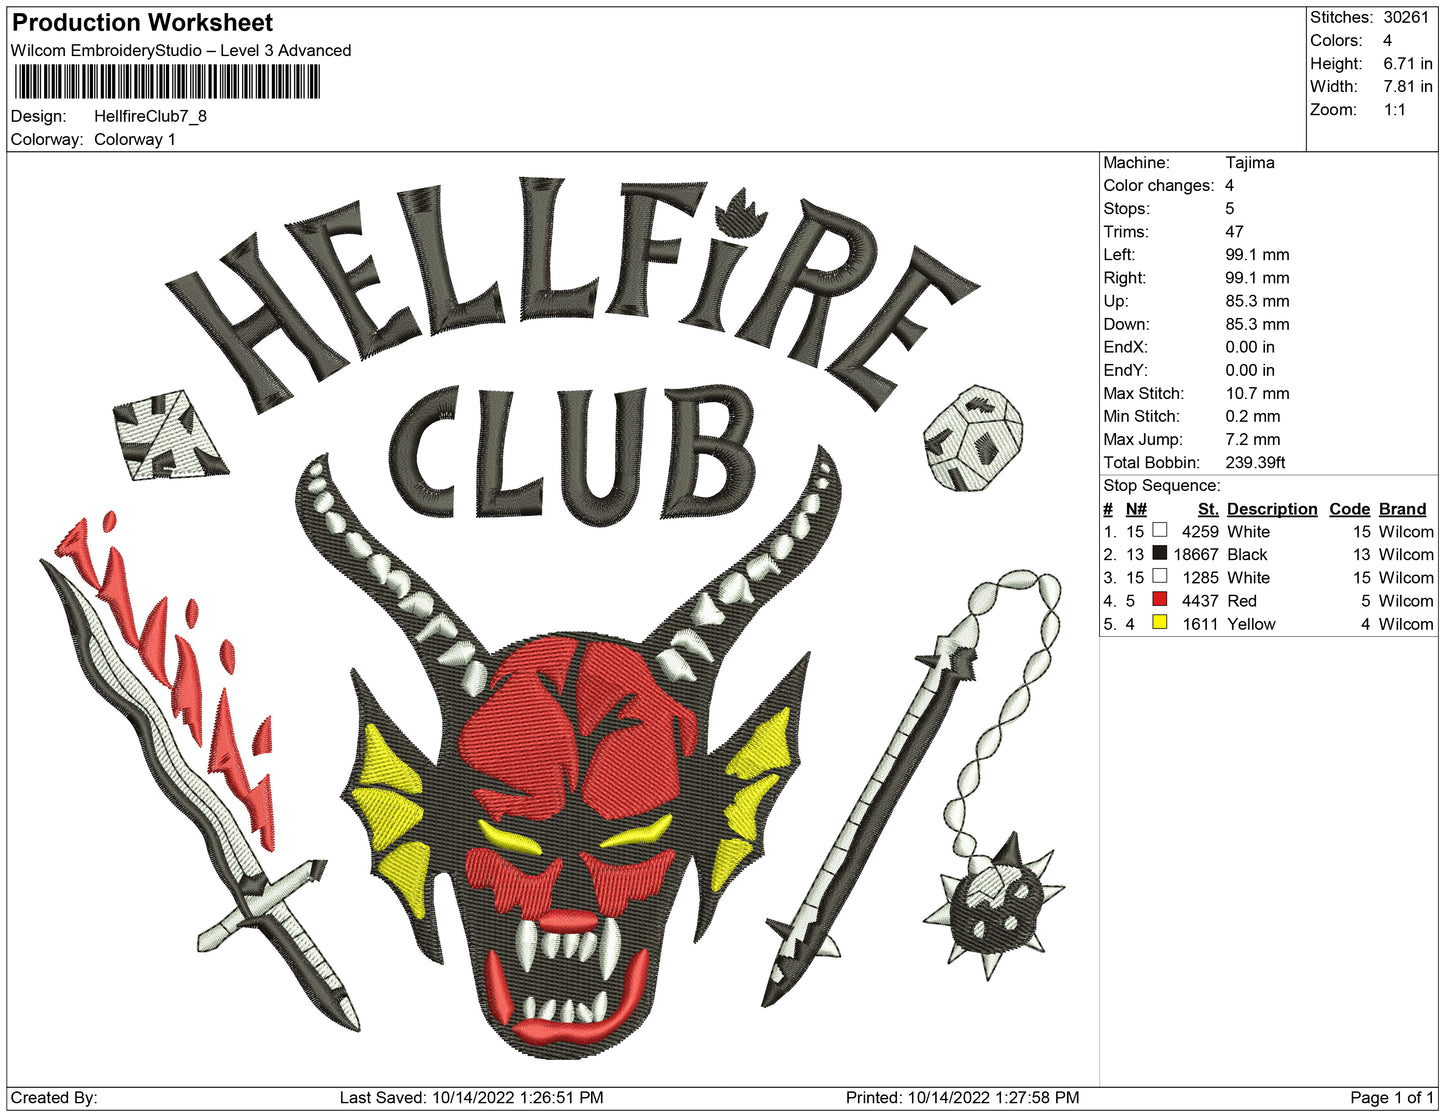 Hell fire Club